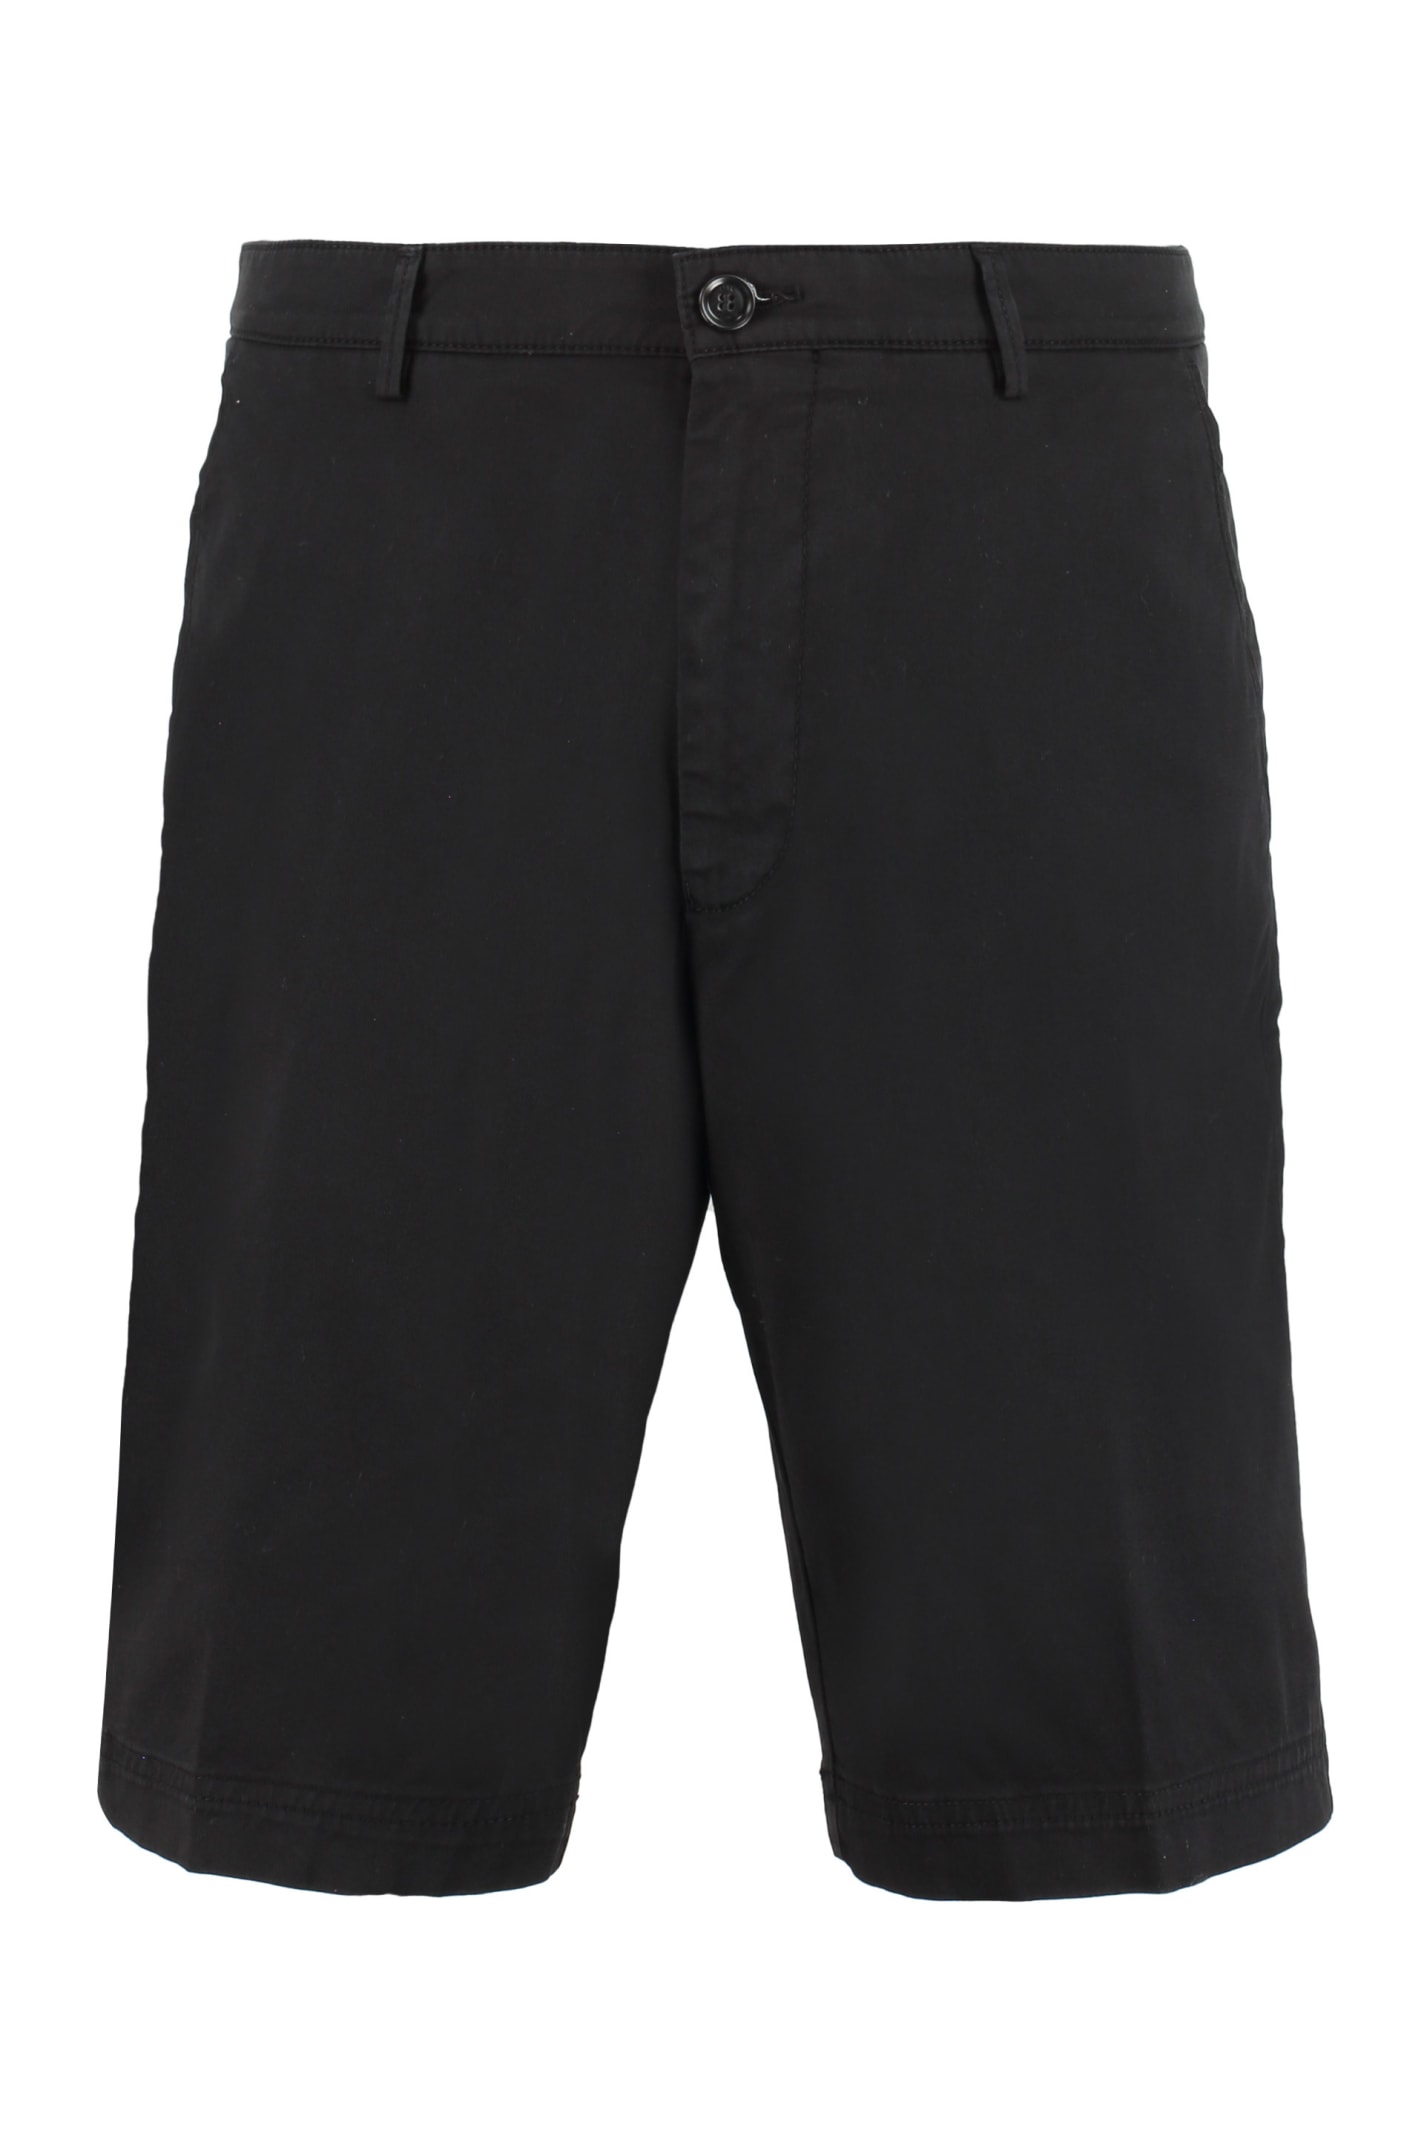 Hugo Boss Slice Cotton Bermuda Shorts